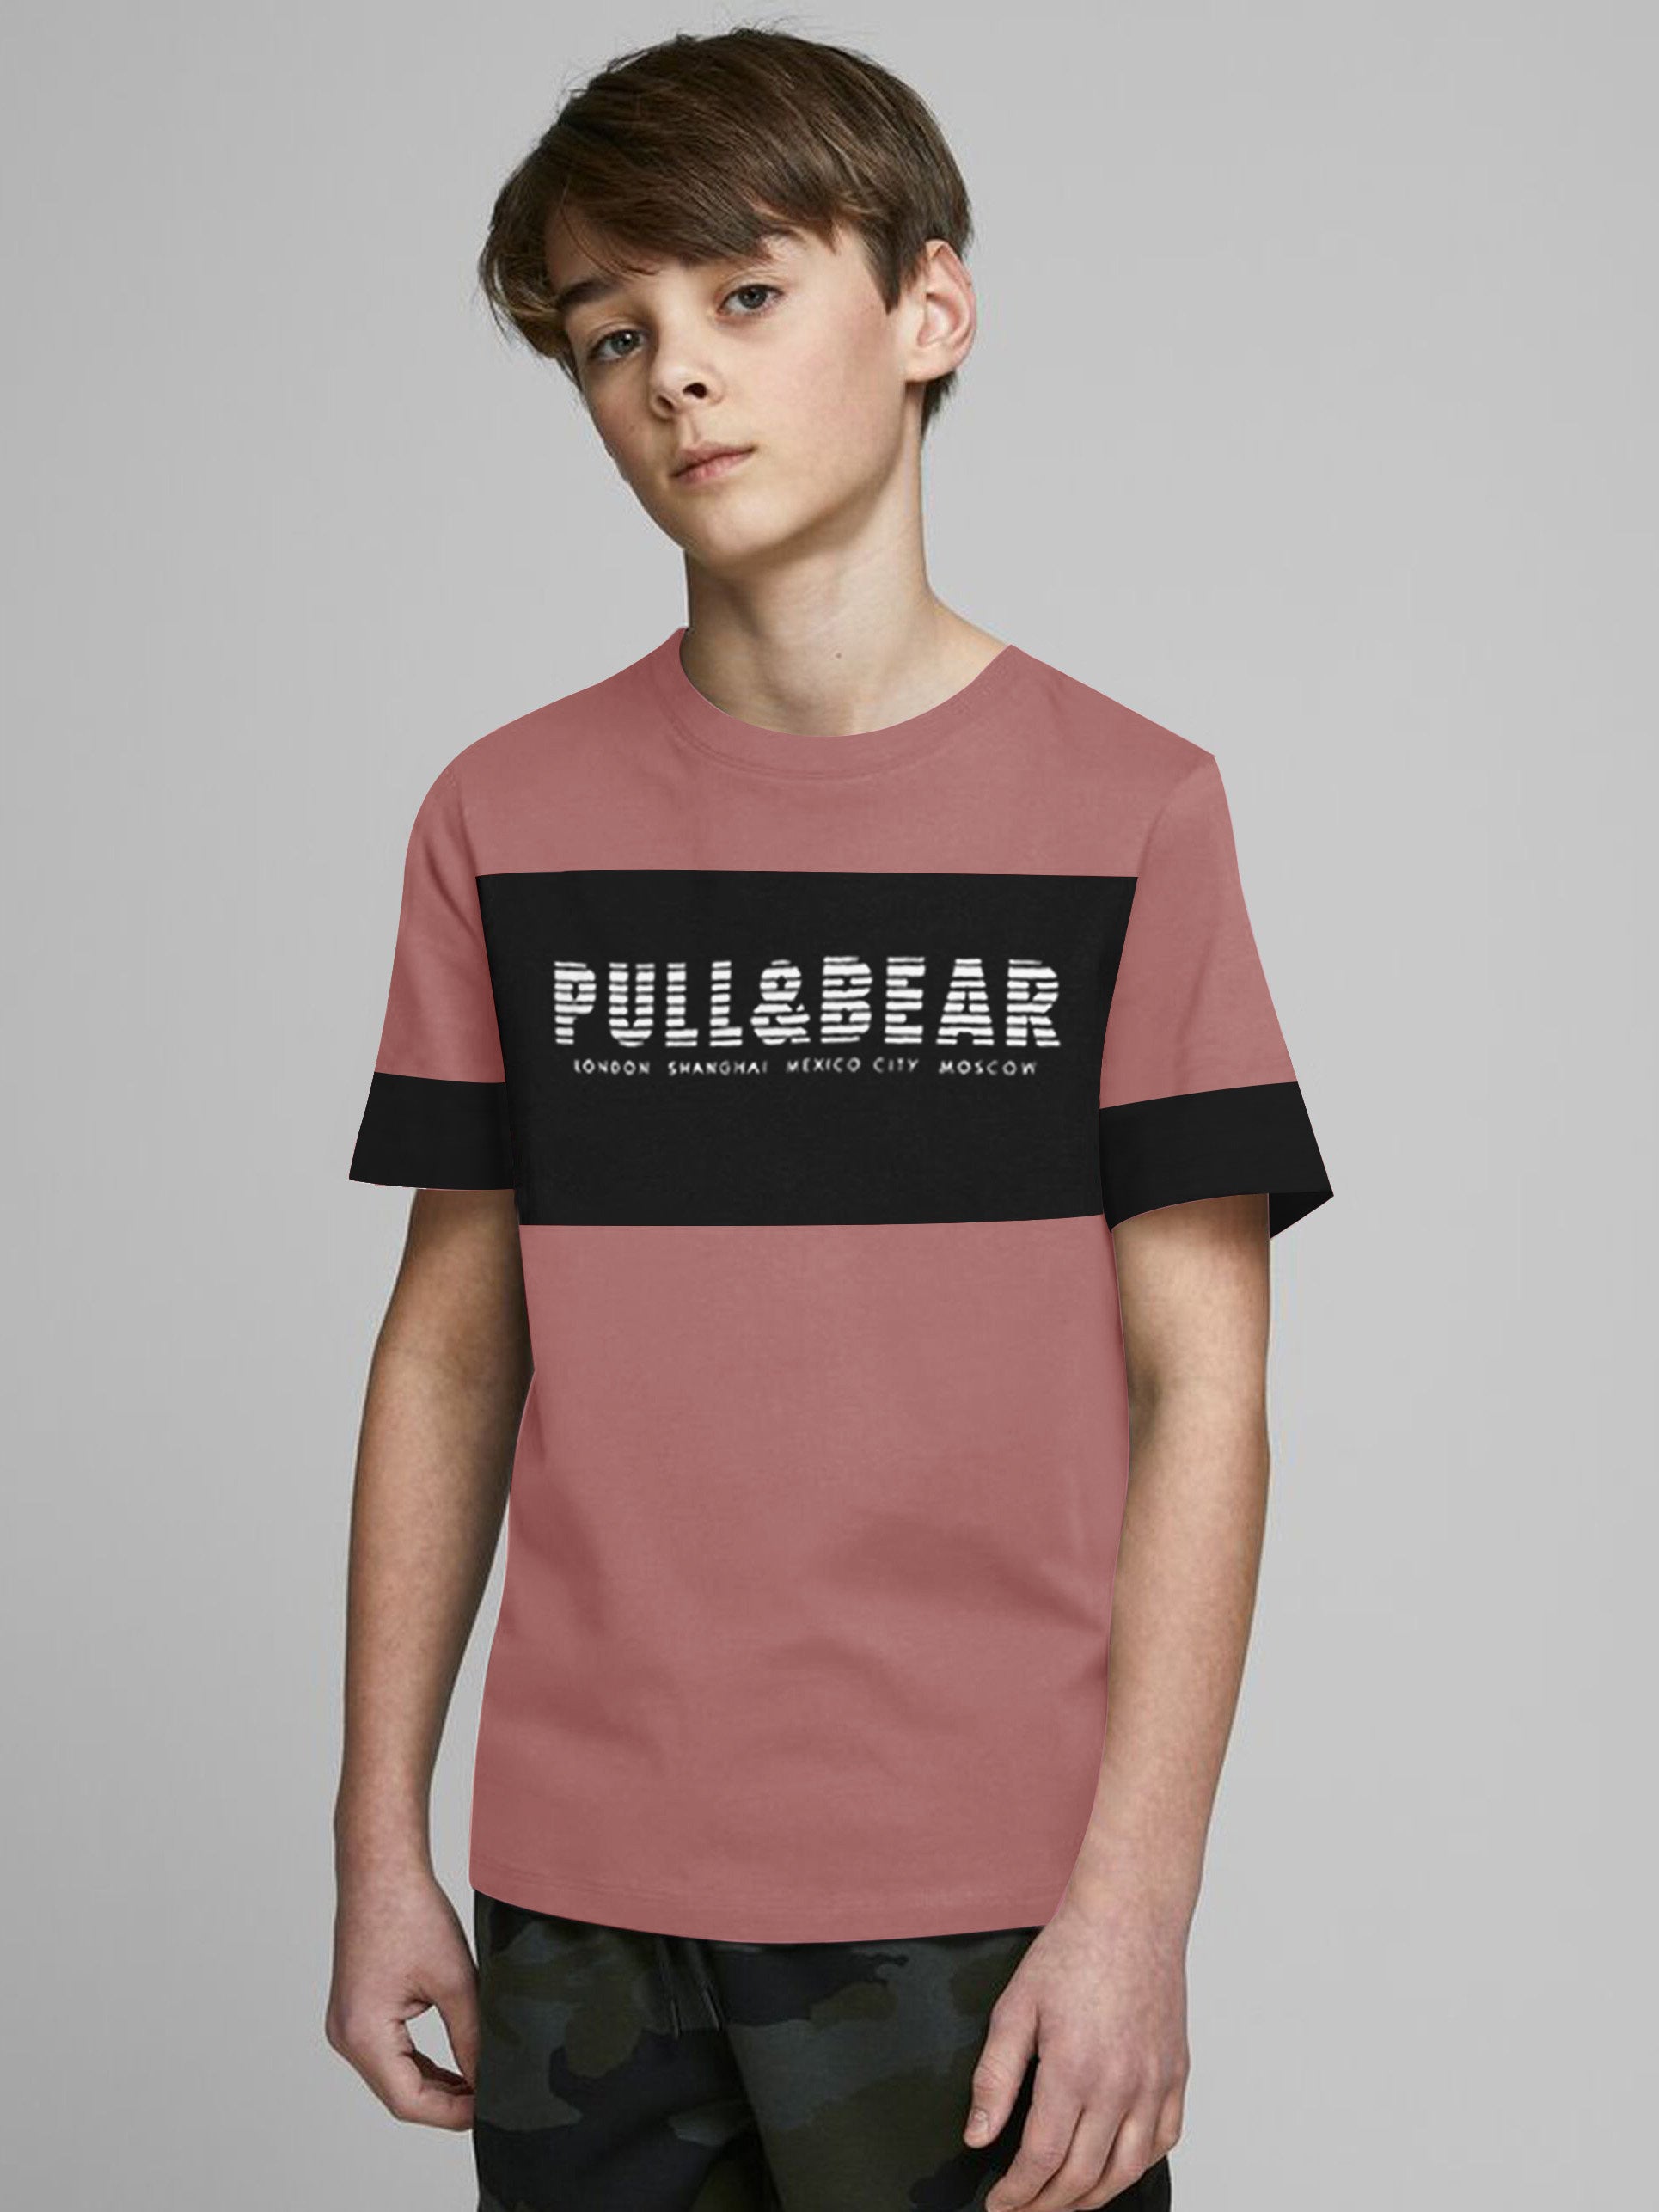 P&B Crew Neck Single Jersey Tee Shirt For Kids-Dark Coral Pink & Black Panel-SP2191